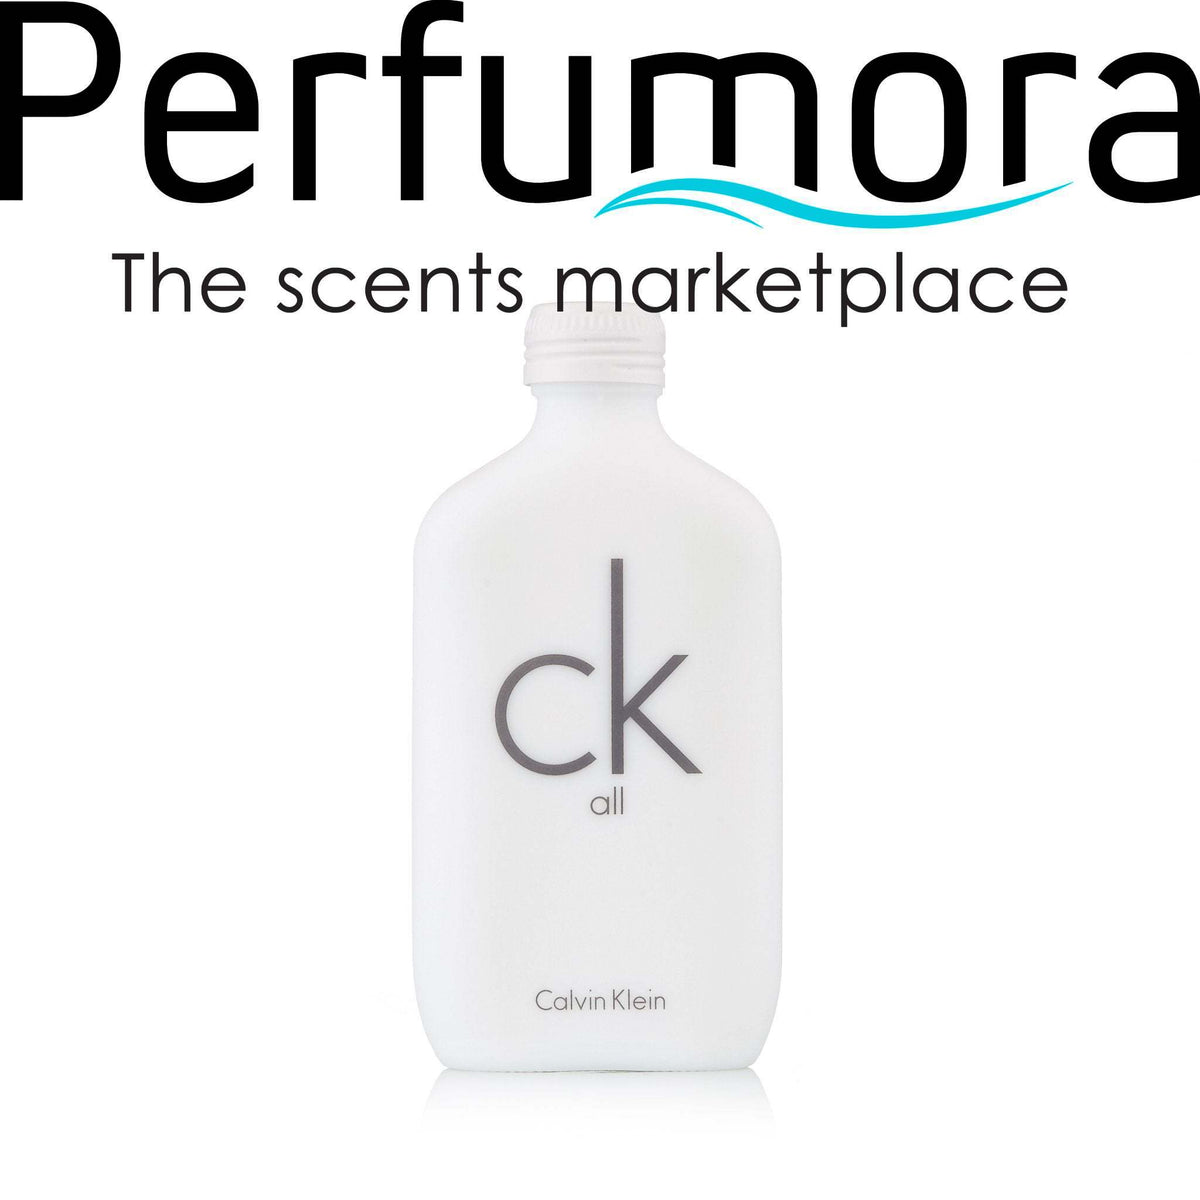 CK All Eau de Toilette Spray for Women and Men by Calvin Klein 3.4 oz.